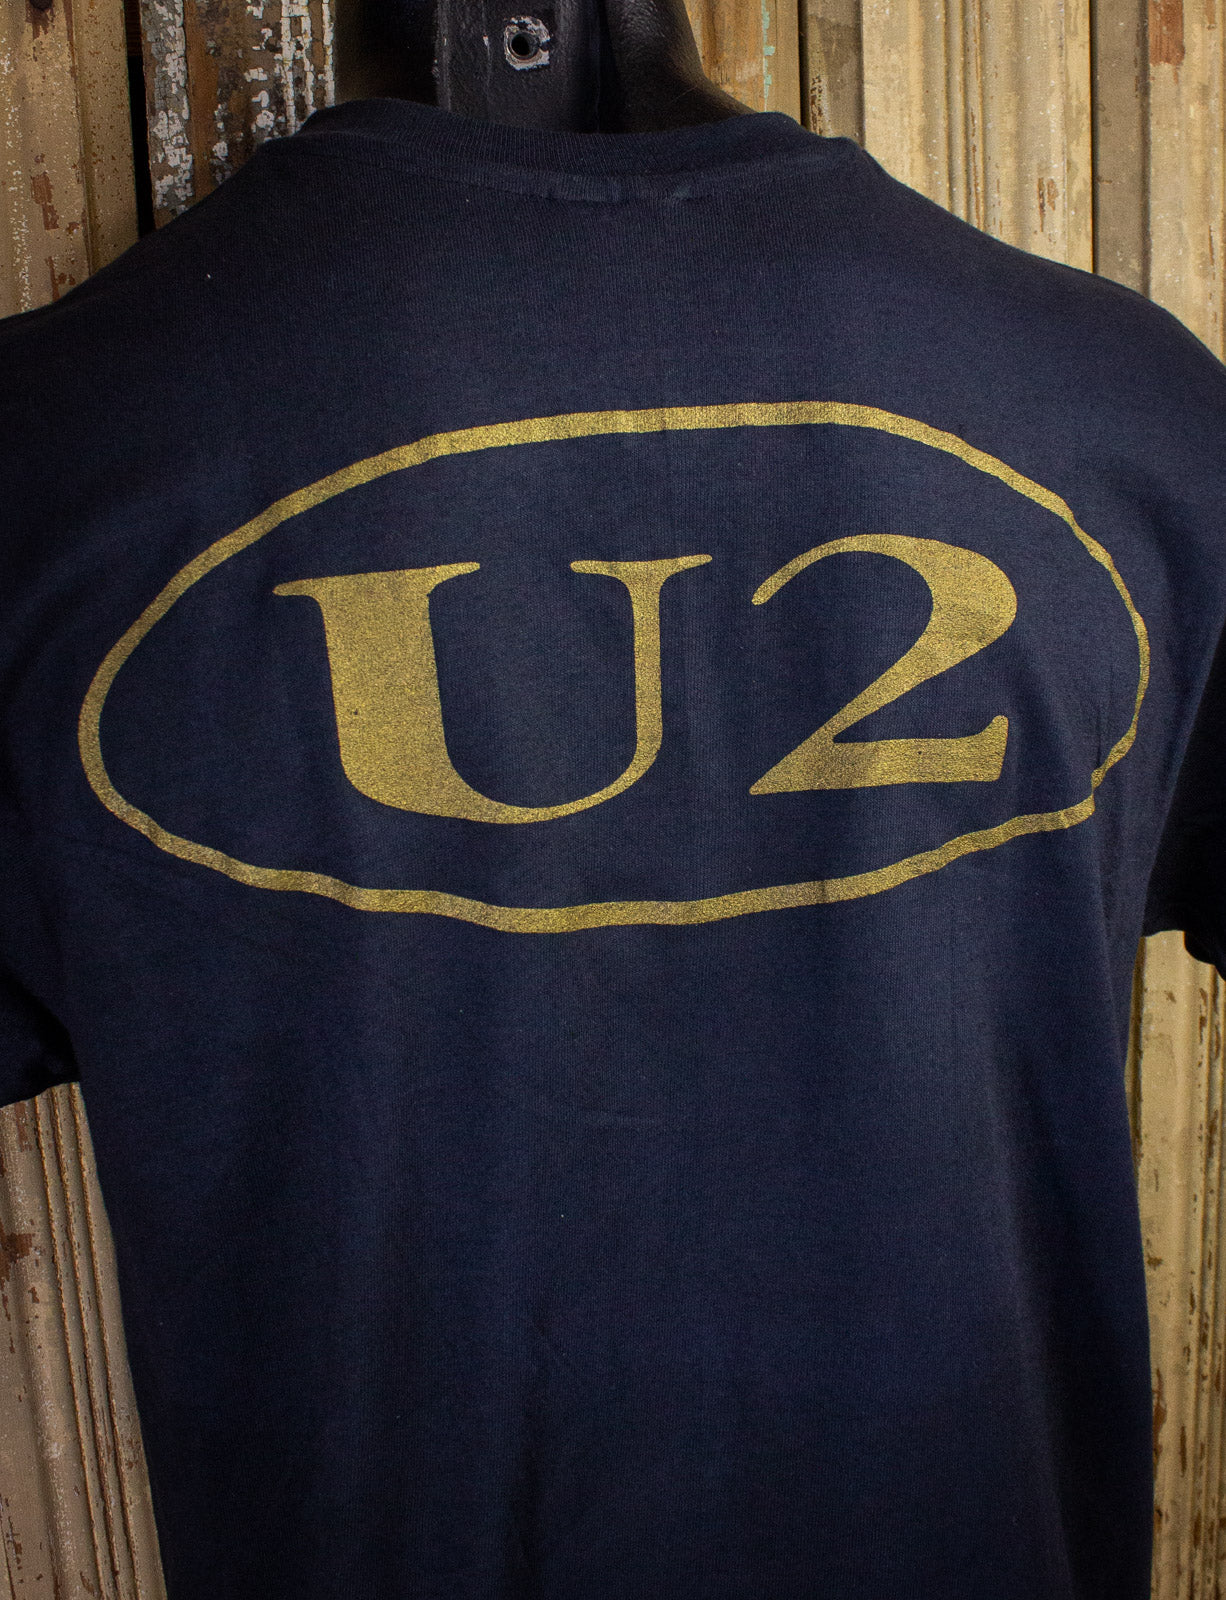 Vintage U2 Joshua Tree Concert T Shirt 80s Black